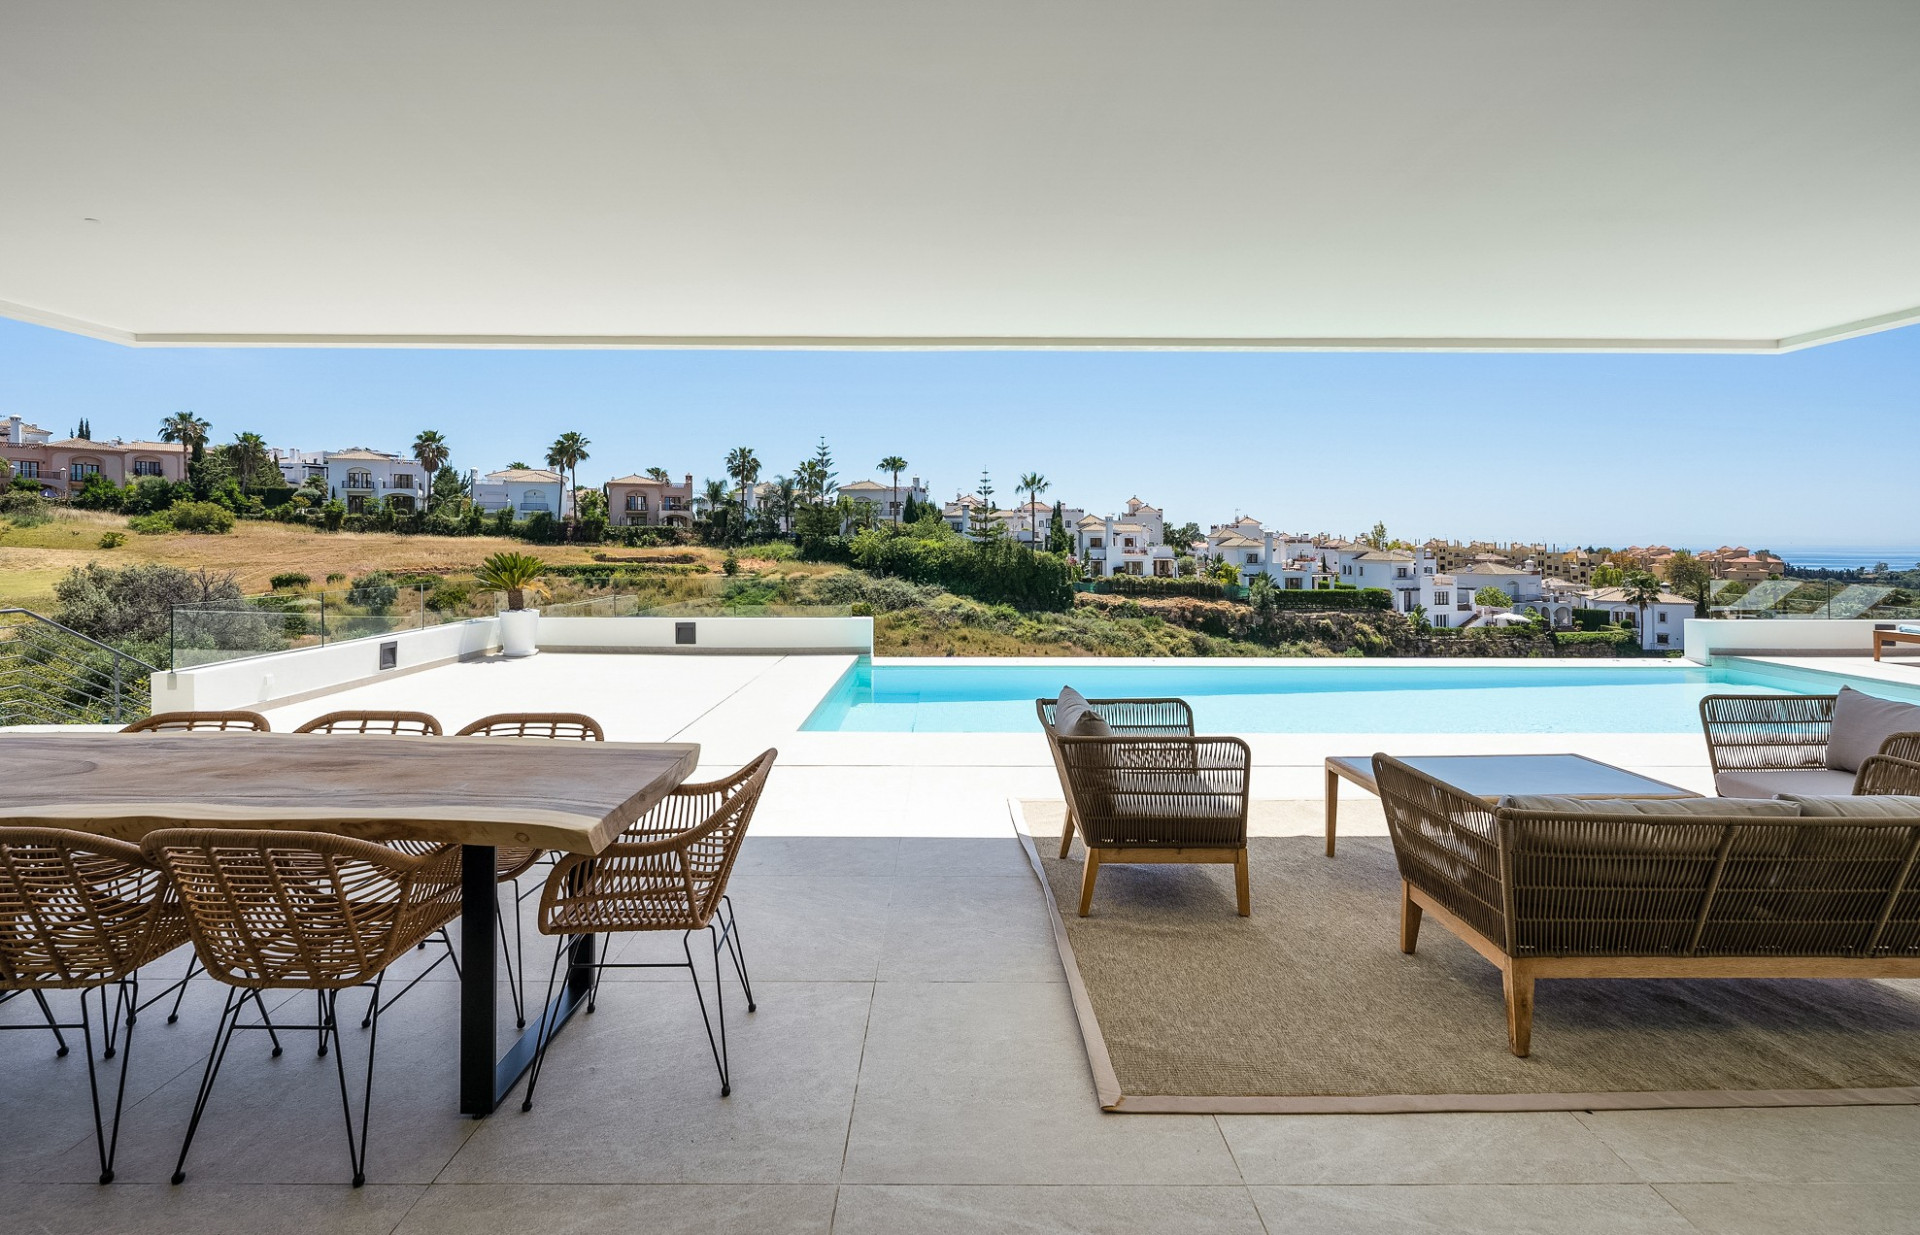 Spectacular 6 villa development with stunning views in La Resina Golf